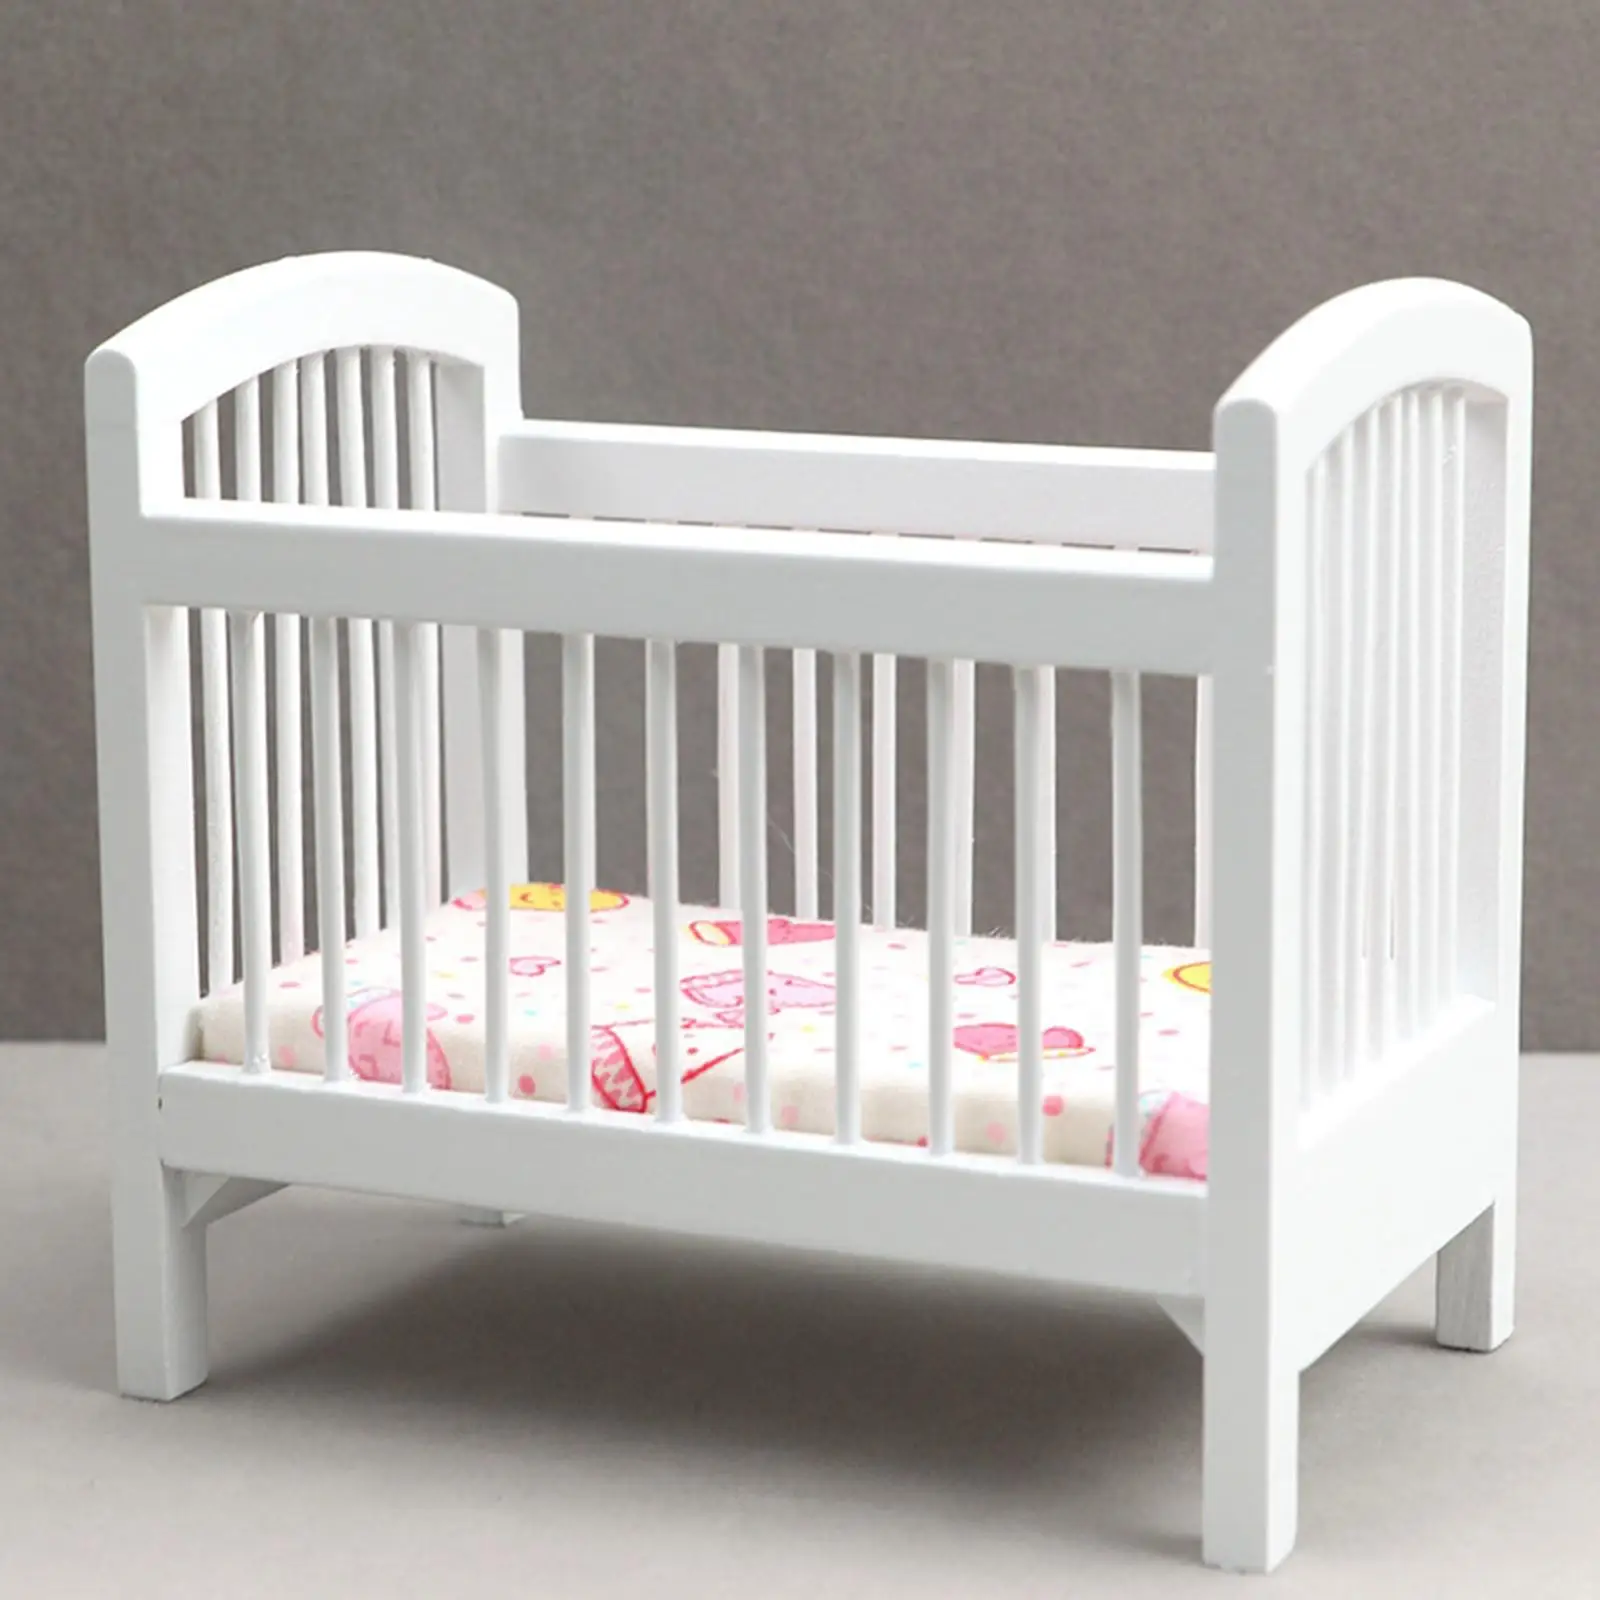 Dollhouse Miniature Wooden Crib Furniture Set with Mattress for Dolls Decor